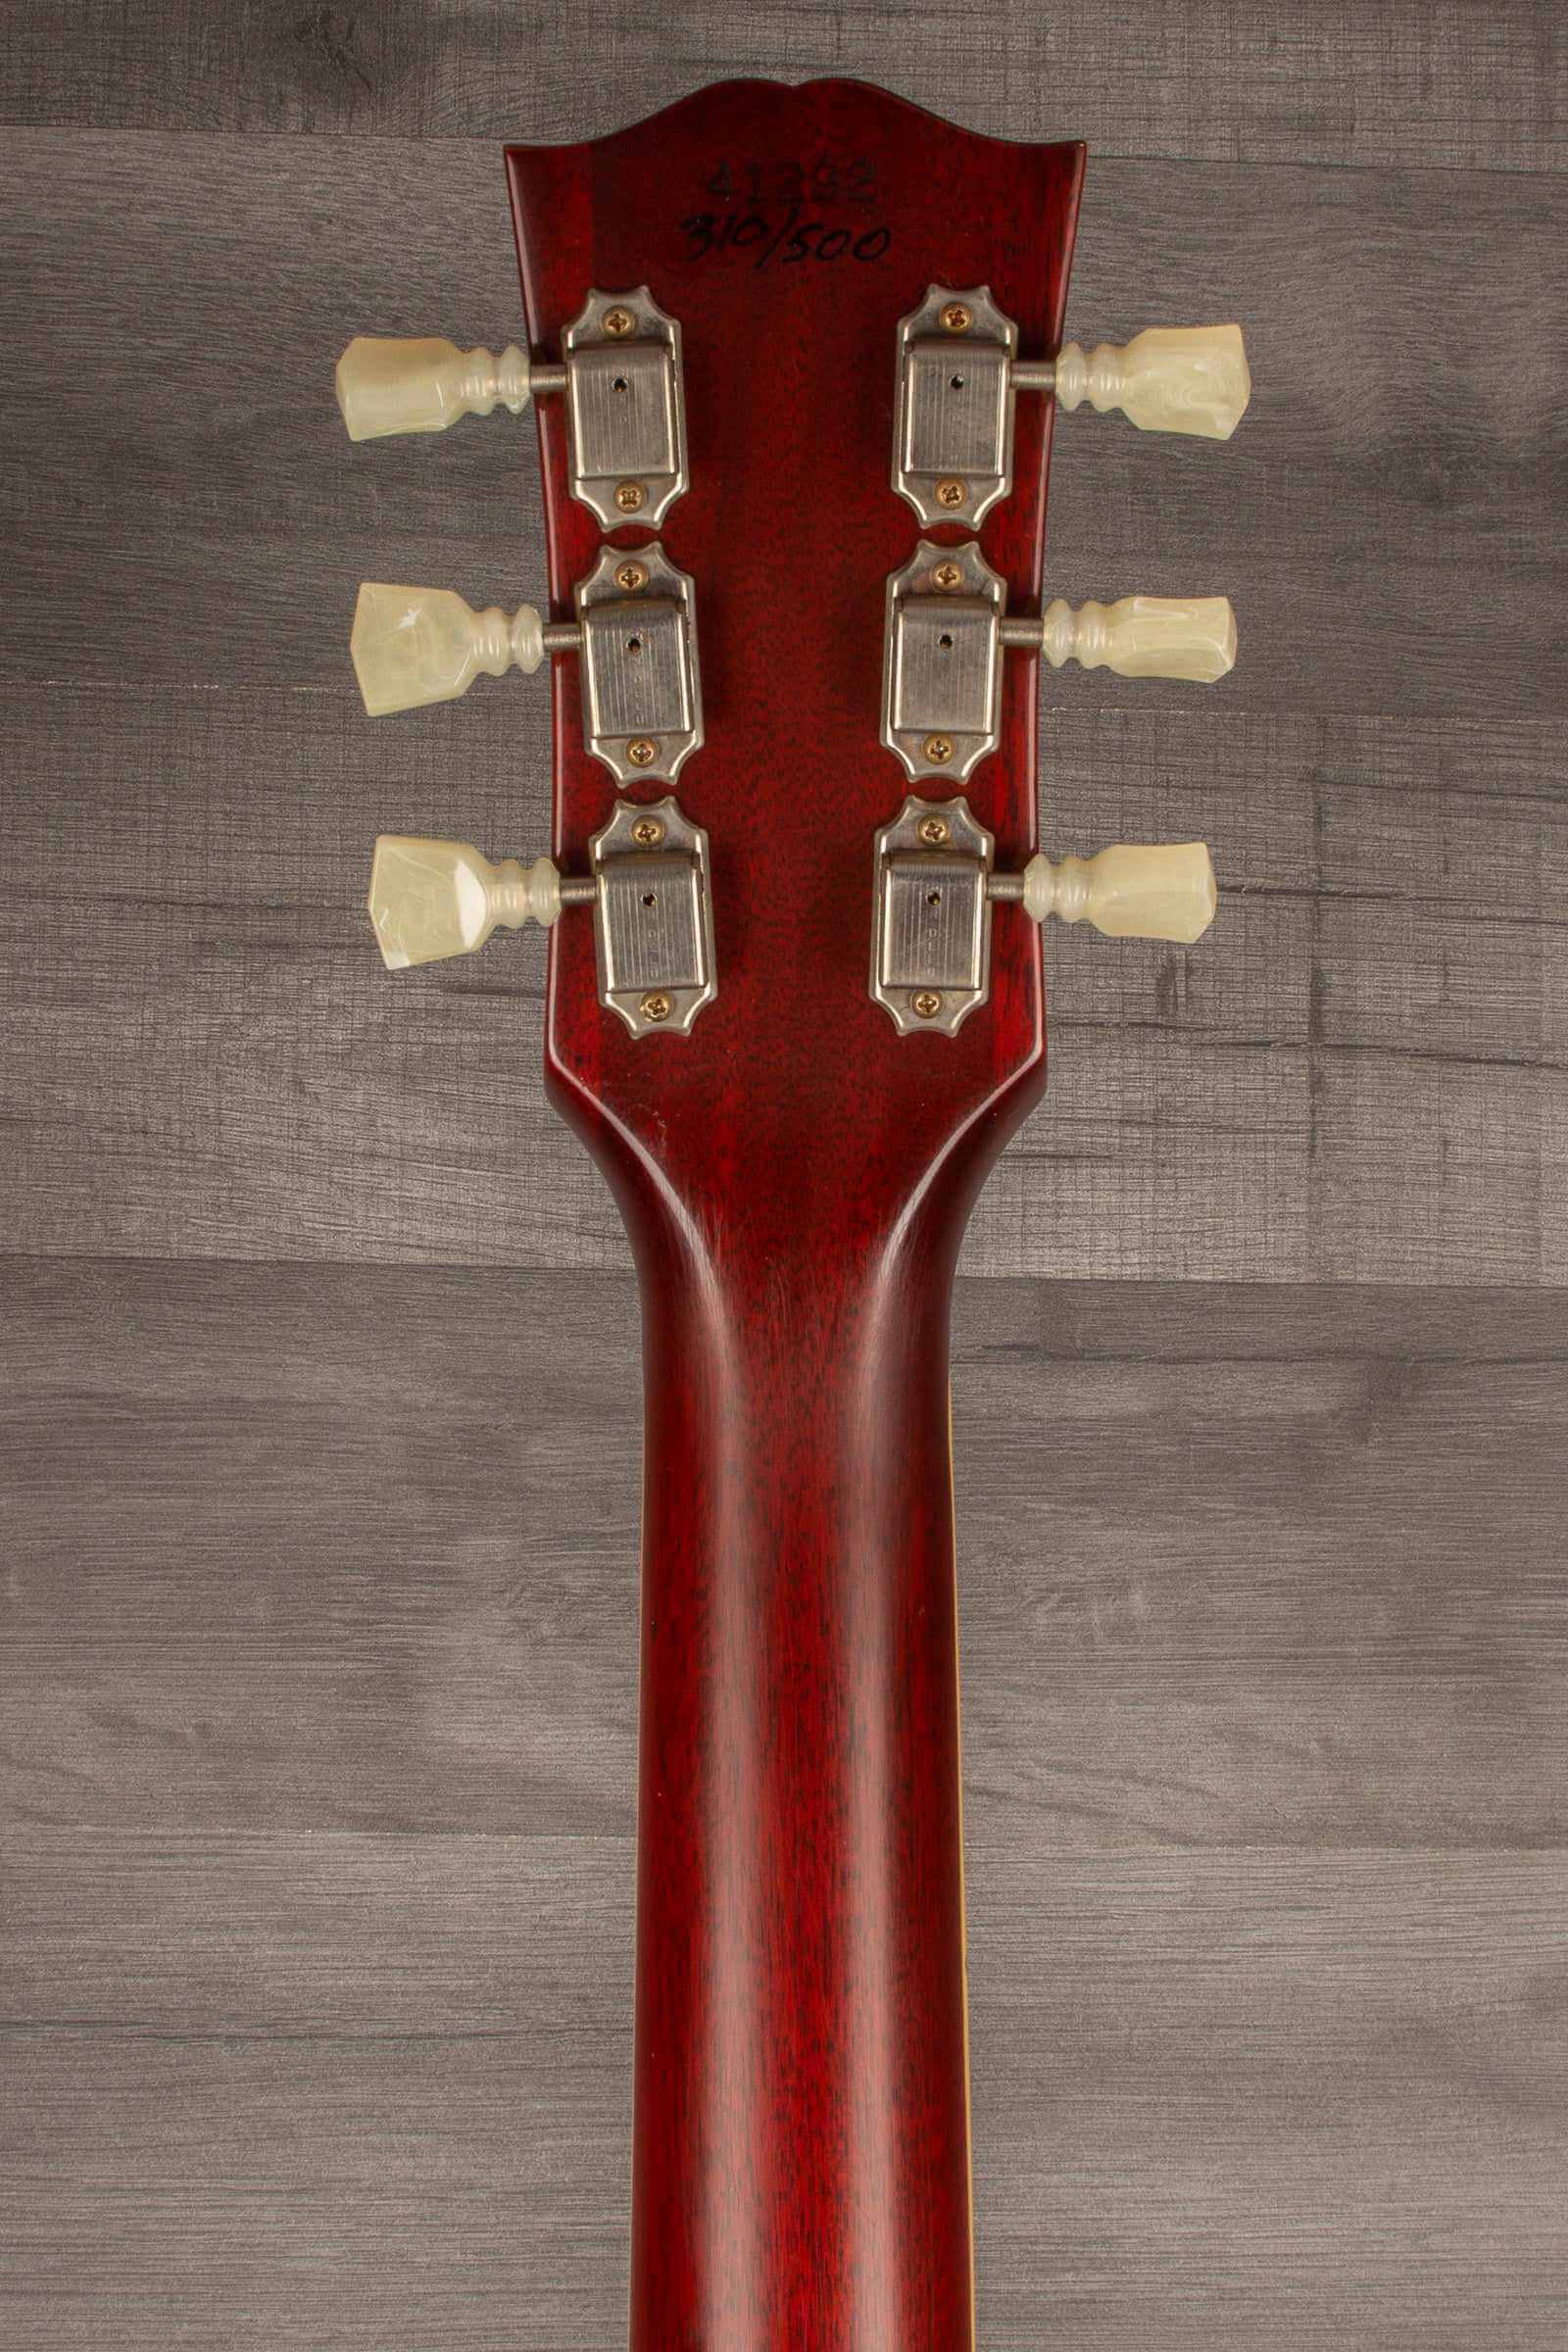 USED - Gibson Artist Collection / Custom Shop Rich Robinson '63 VOS ES-335 Ltd - MusicStreet